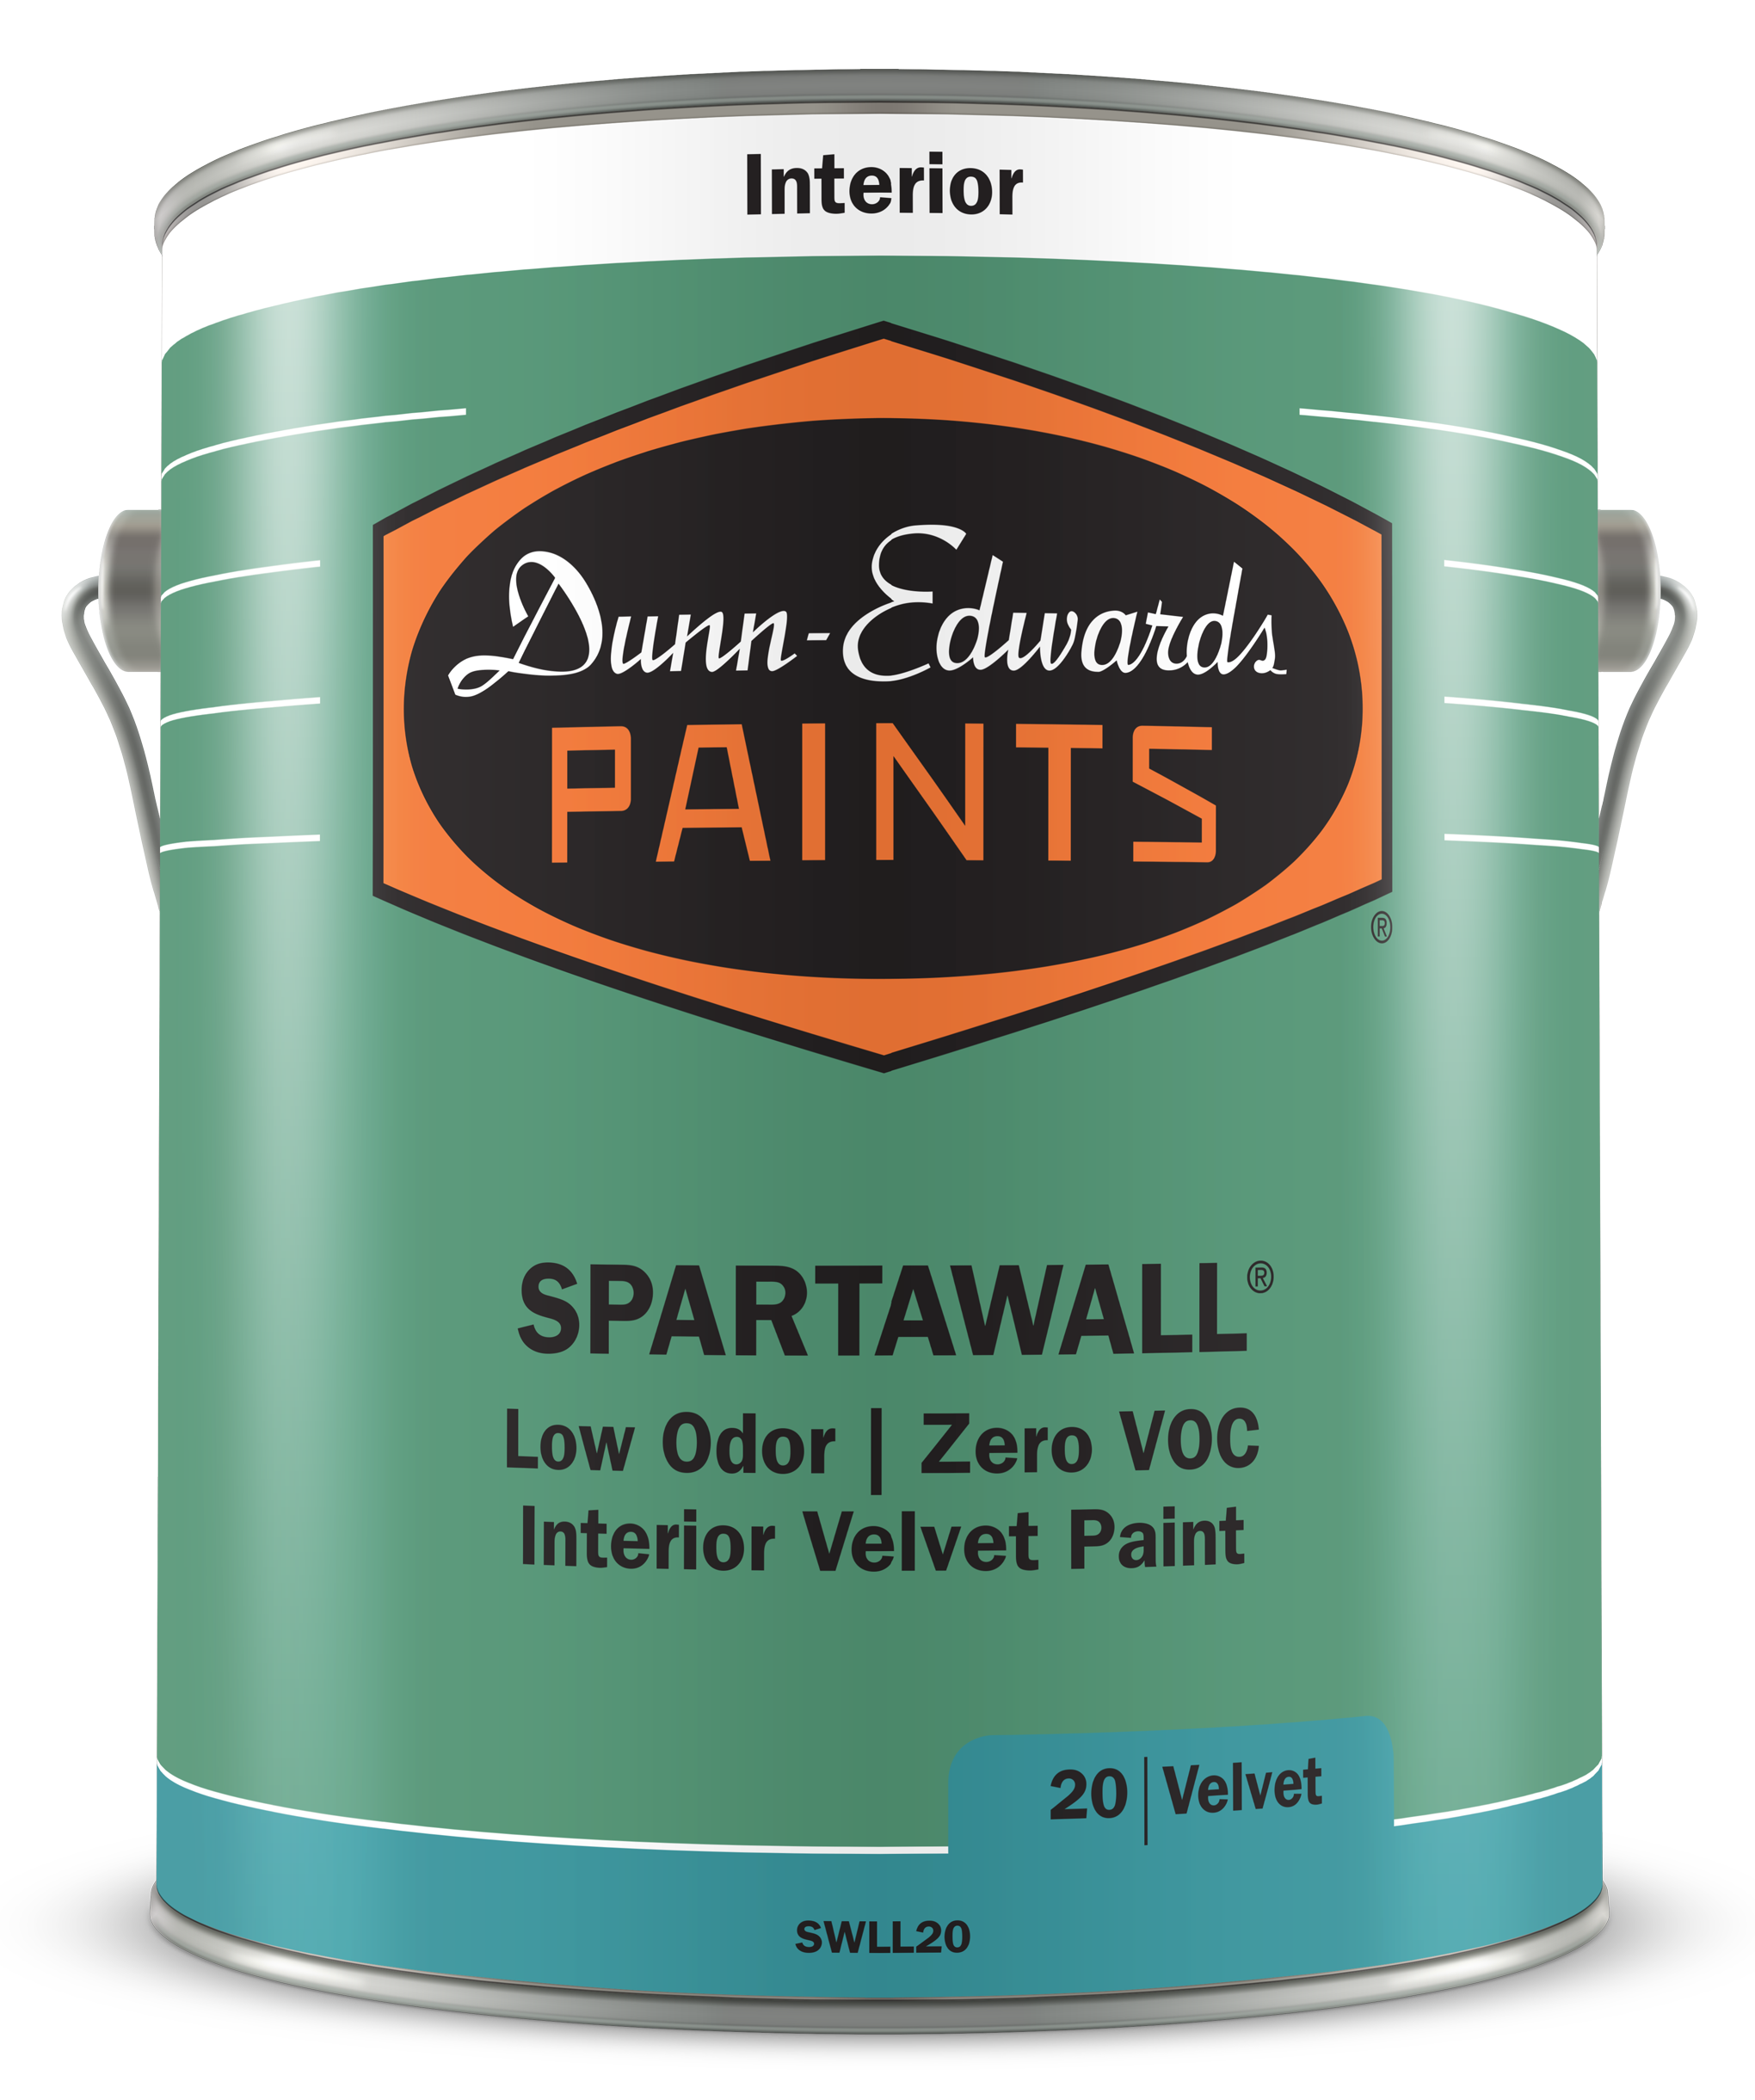 SPARTAWALL Interior Velvet Paint Can